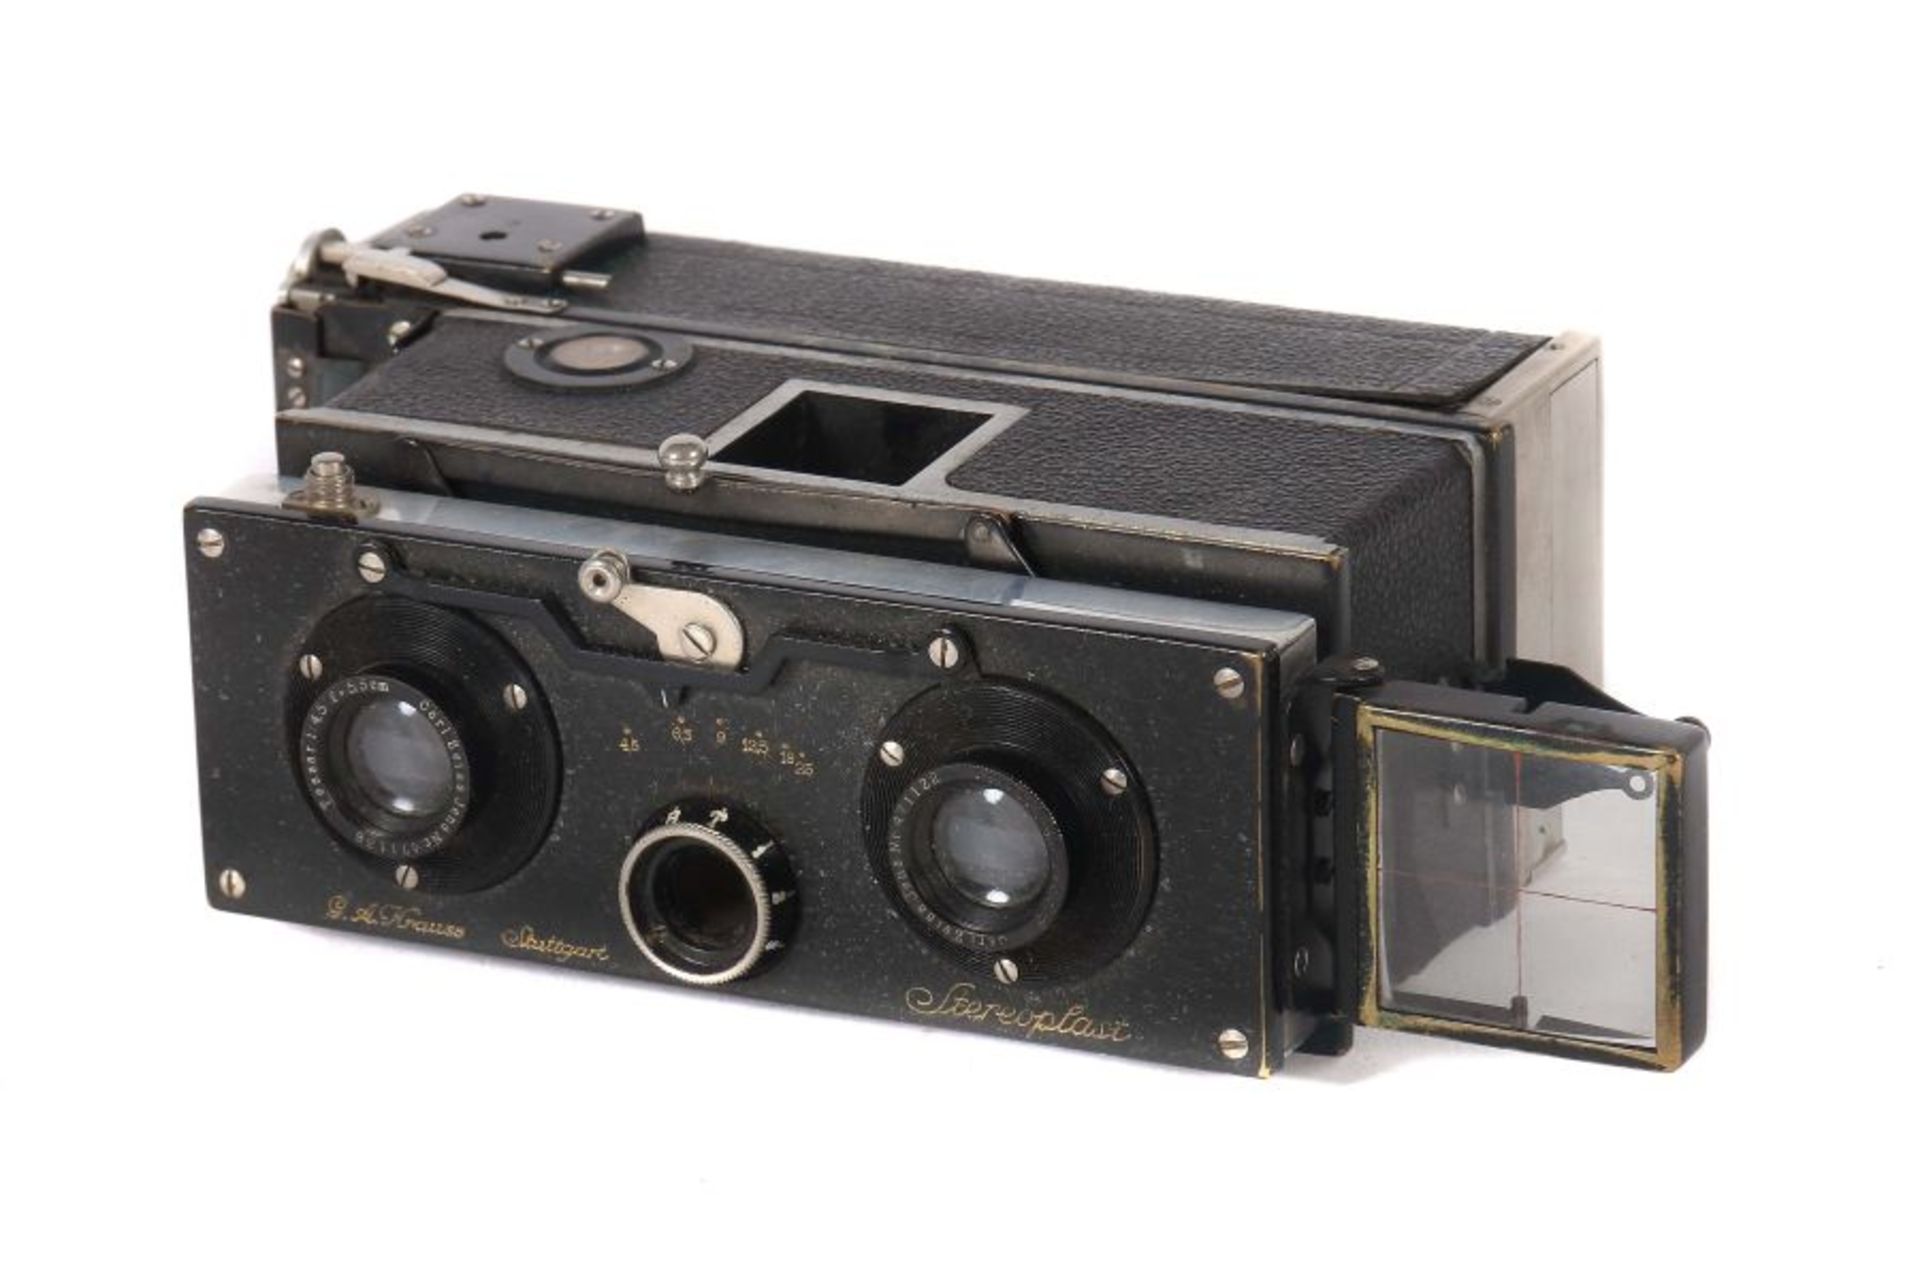 Stereokamera "Stereoplast"G.A. Krauss, Stuttgart, um 1920, Magazin für Platten 45x107 mm, Objektive: